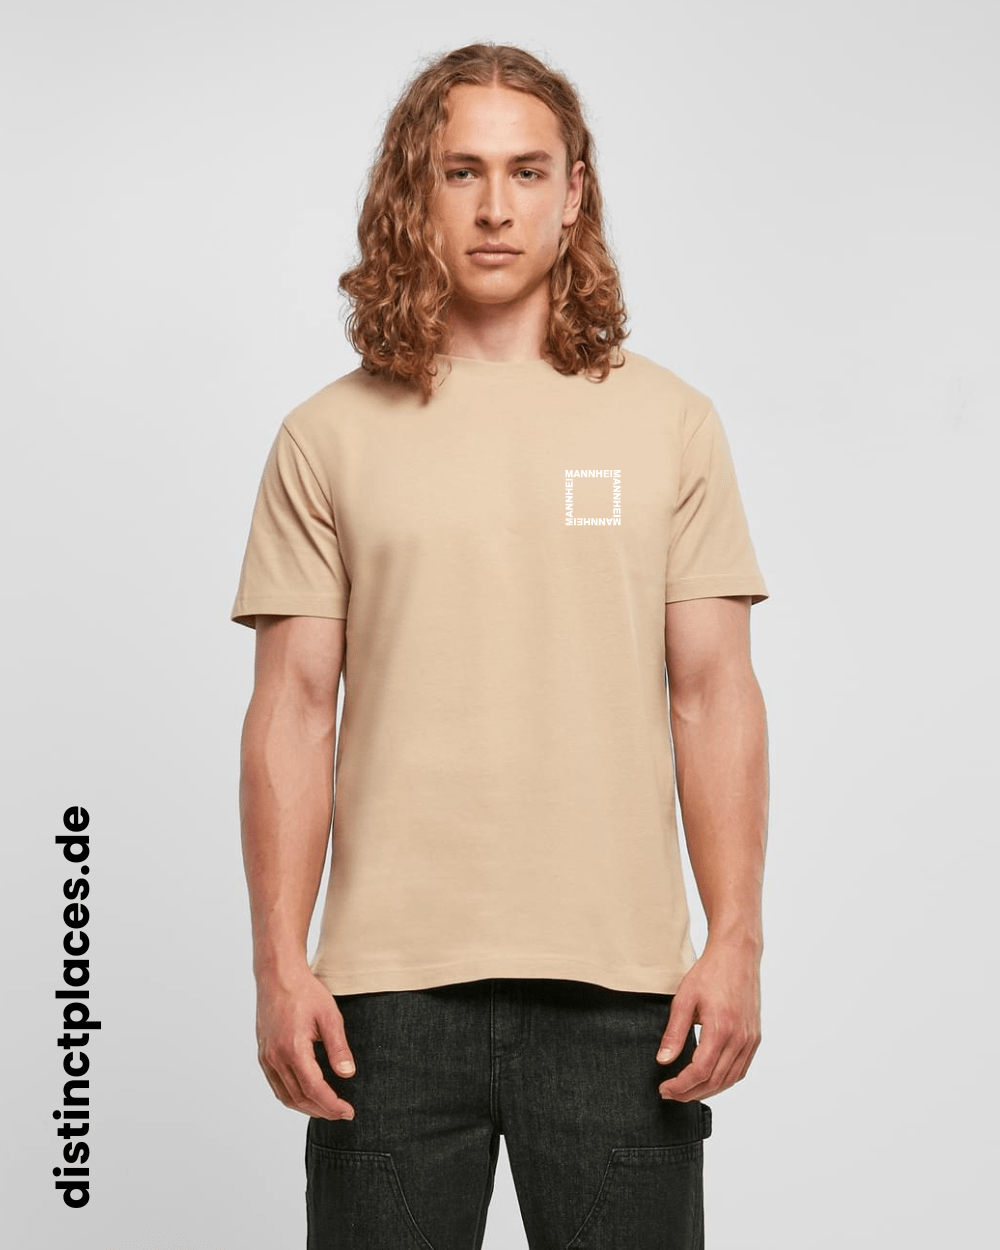 Mannheim Quadrat Shirt